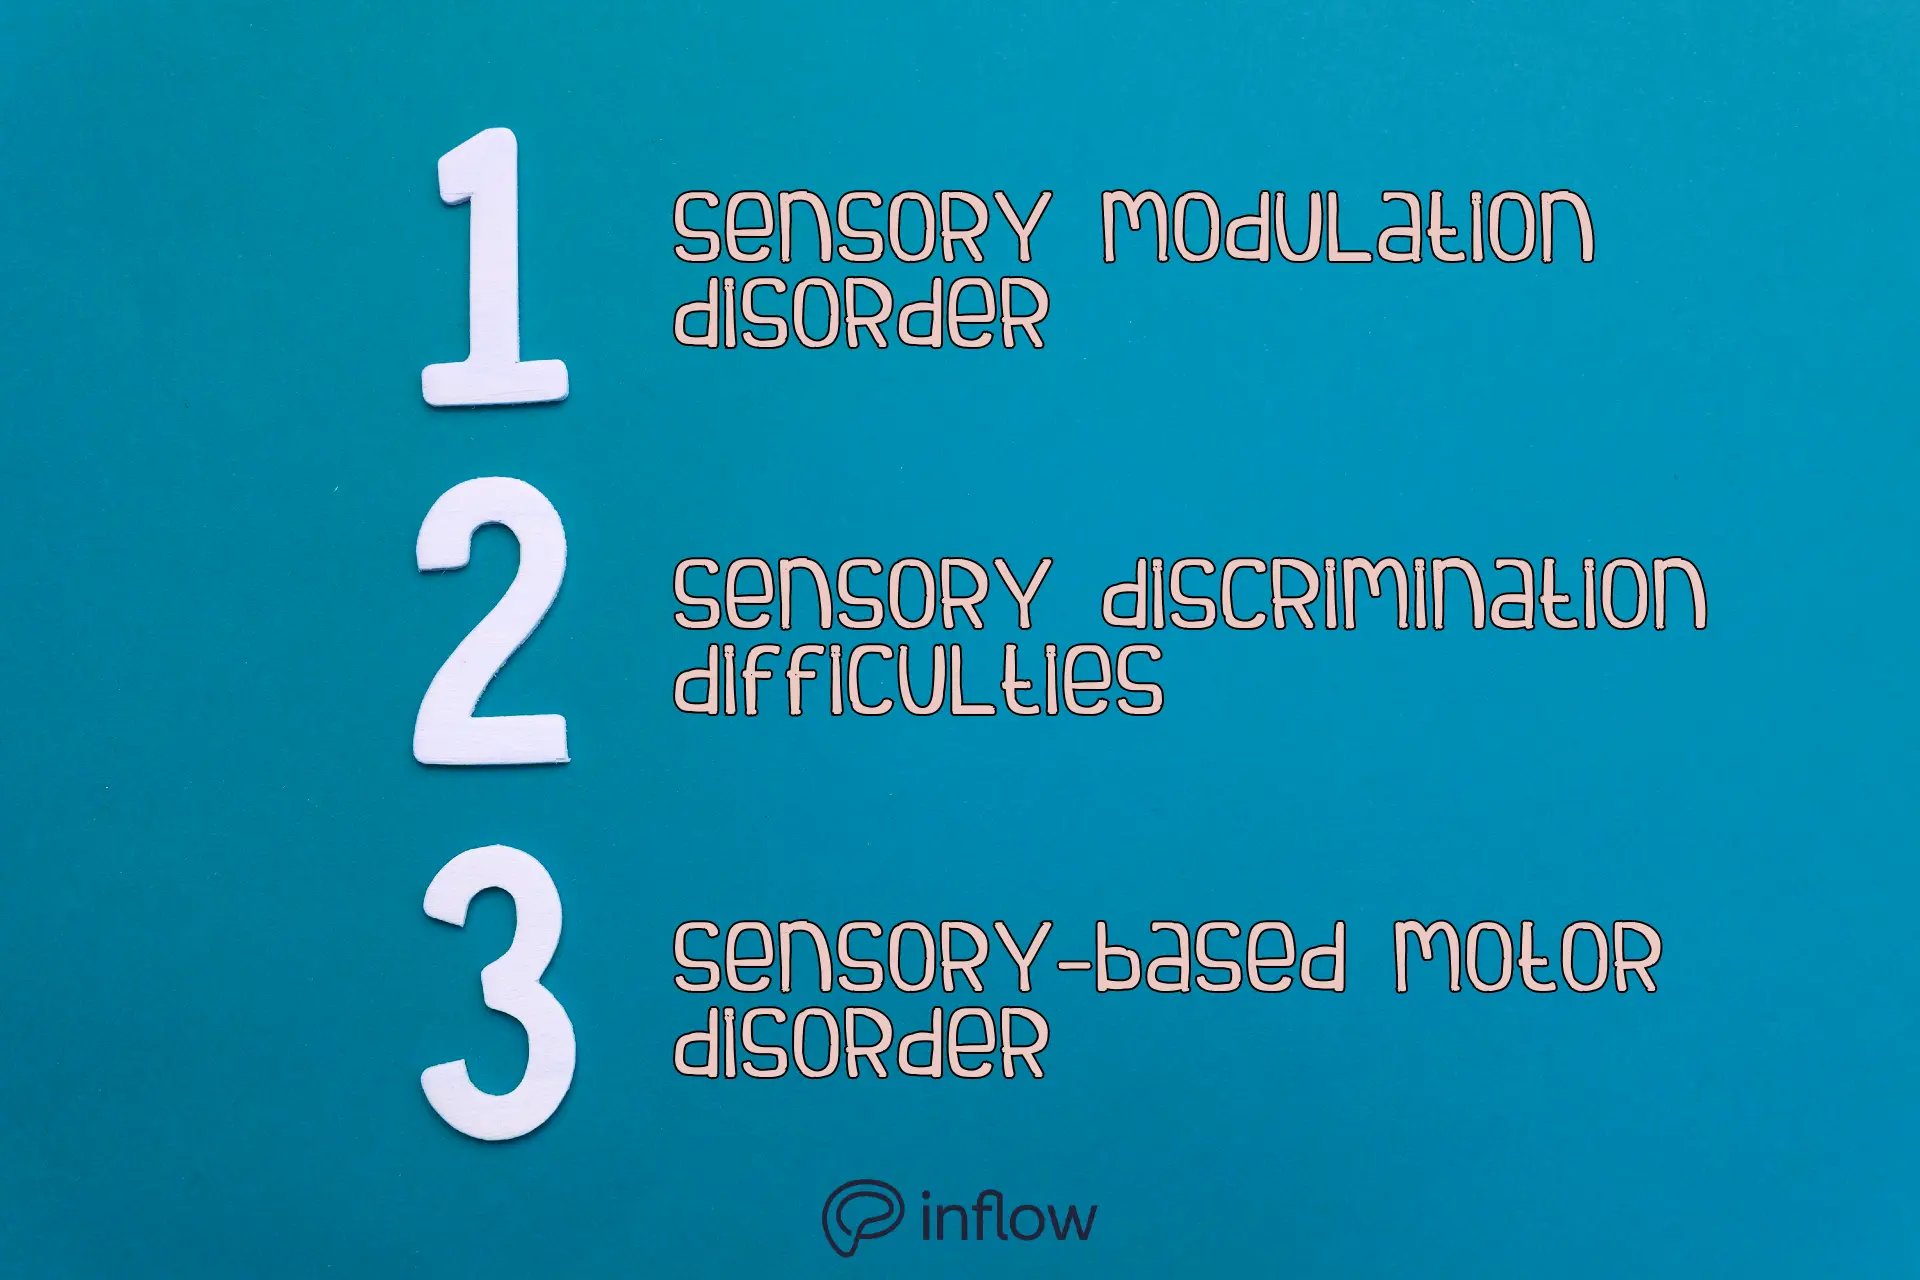 counting 3 types of sensory disorders. 1. sensory modulation disorder, 2. sensory discrimination difficulties, 3. sensory-based motor disorder